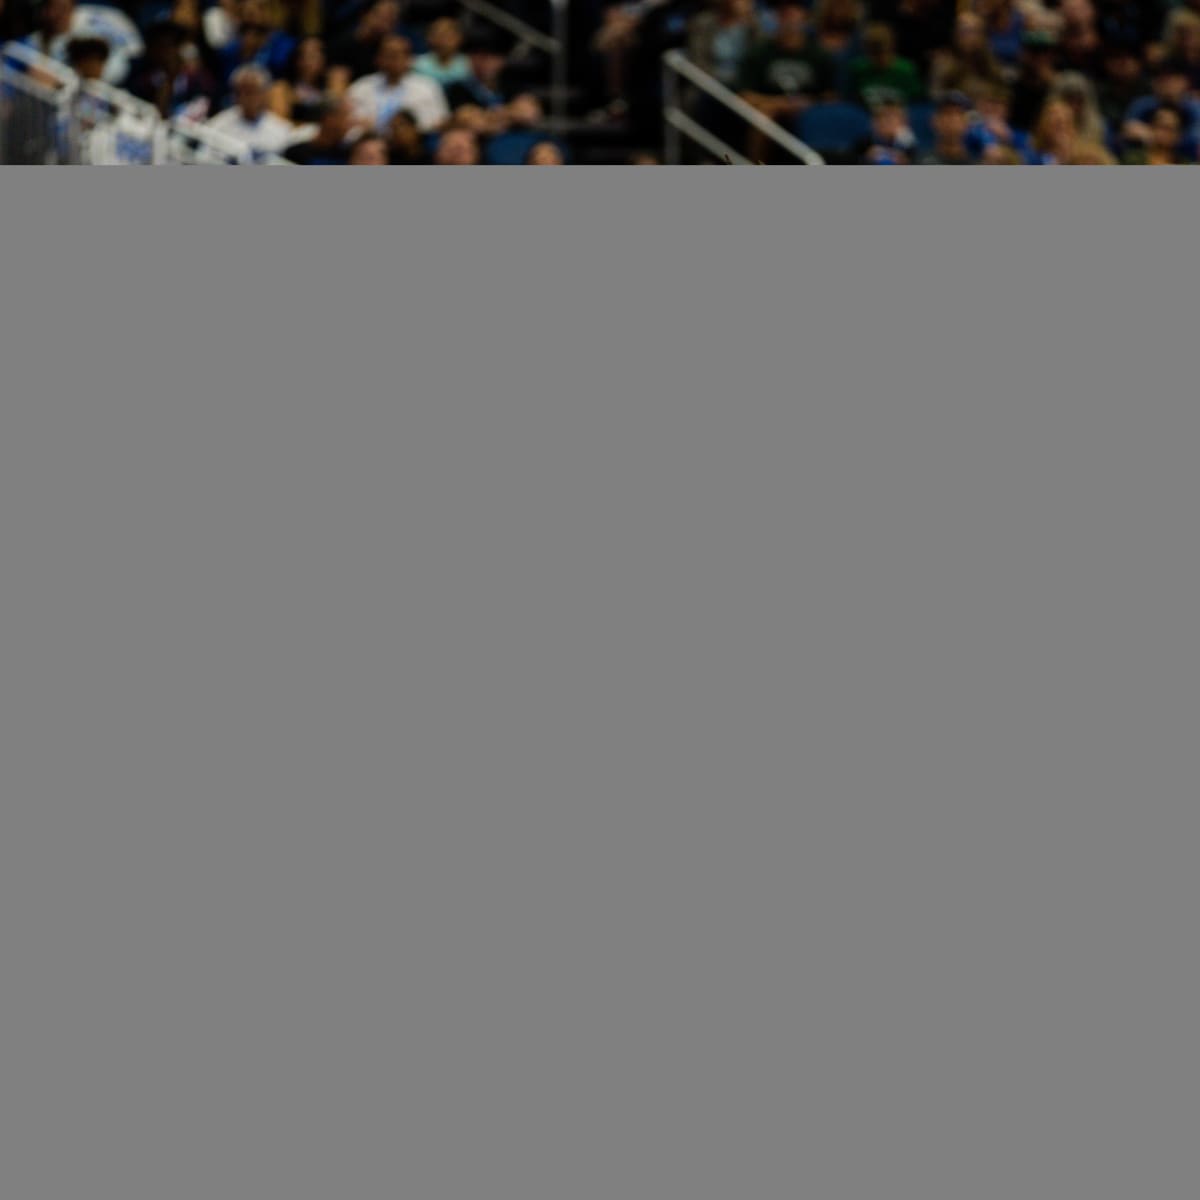 Inactief bladerdeeg Kalksteen Orlando Magic Big Man Bol Bol: Most 'Unique' Player in NBA? - Sports  Illustrated Orlando Magic News, Analysis, and More